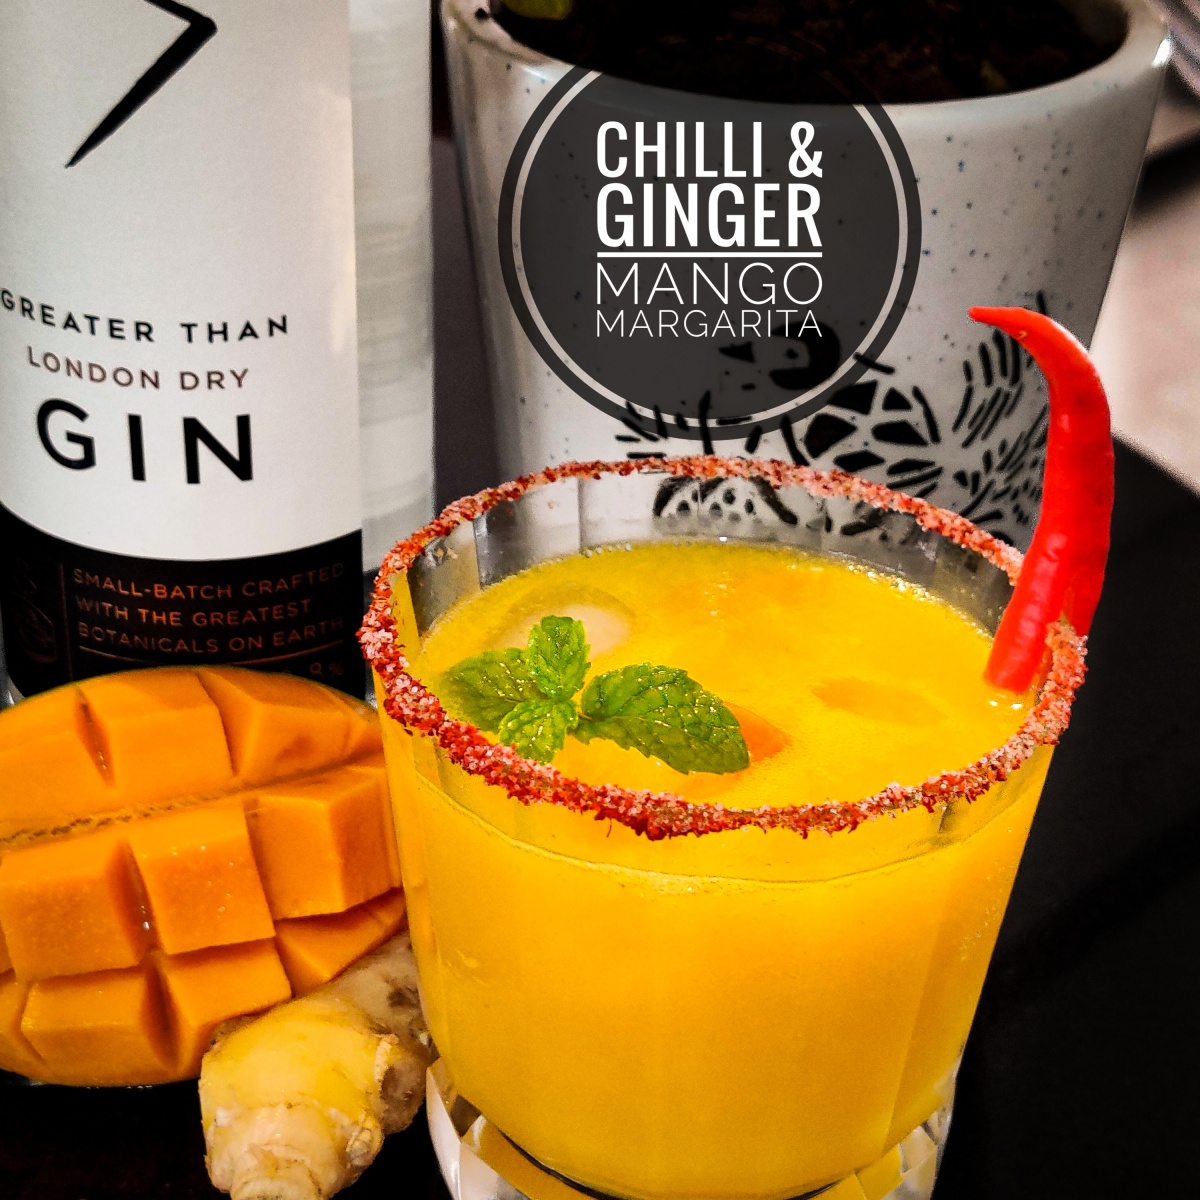 Chilli & Ginger, Mango Margarita